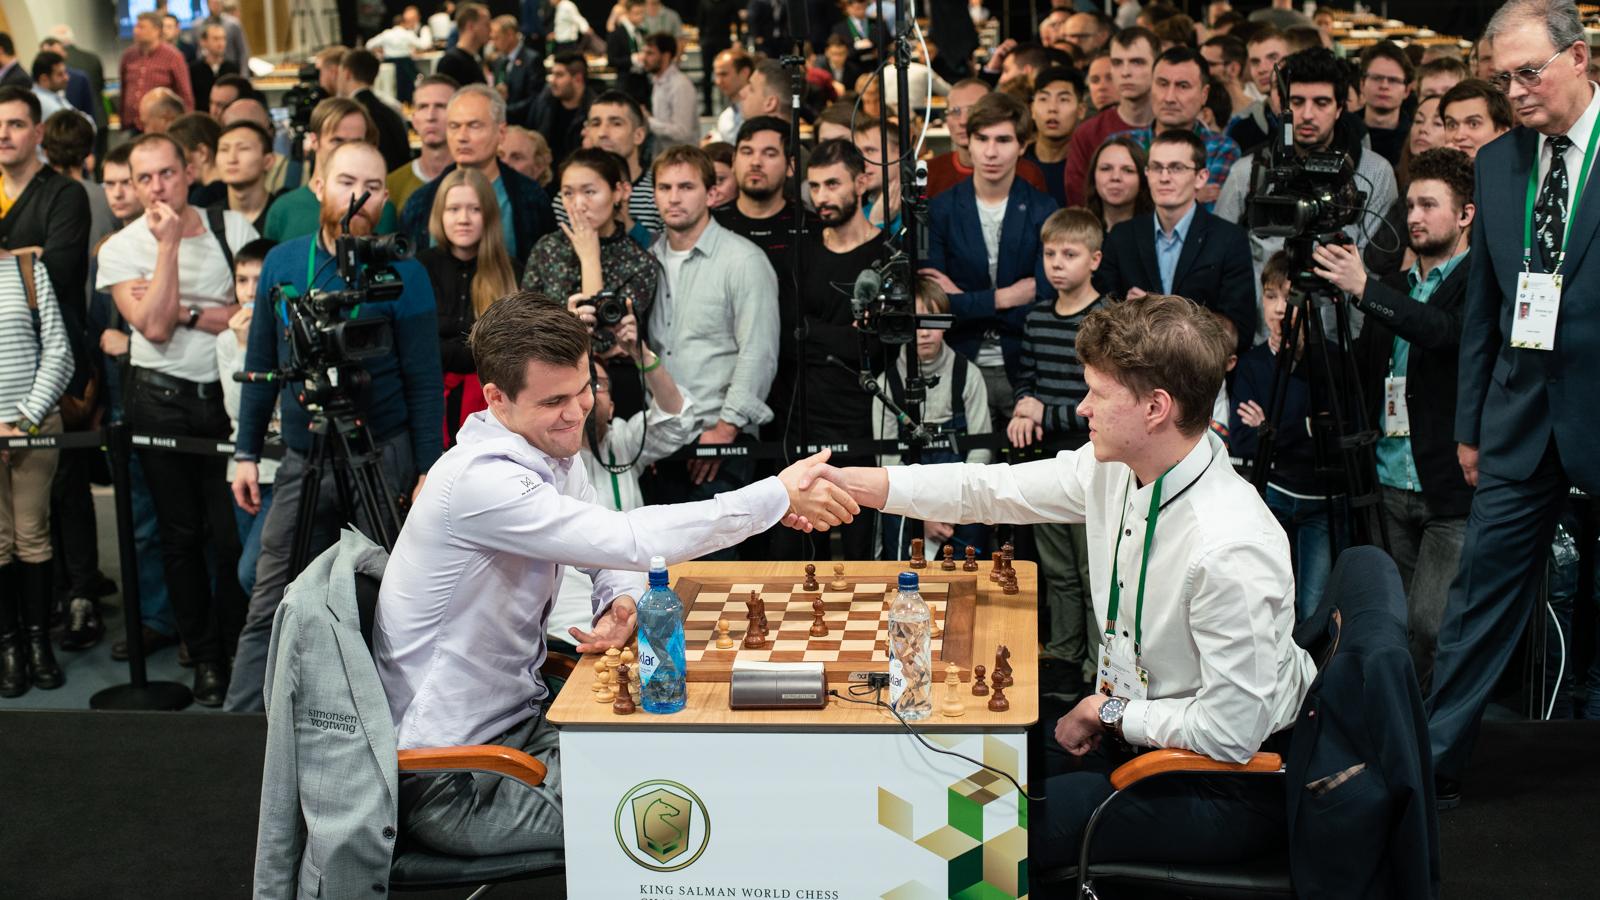 St. Petersburg, Russia - December 29, 2018: Grandmaster Aleksandra